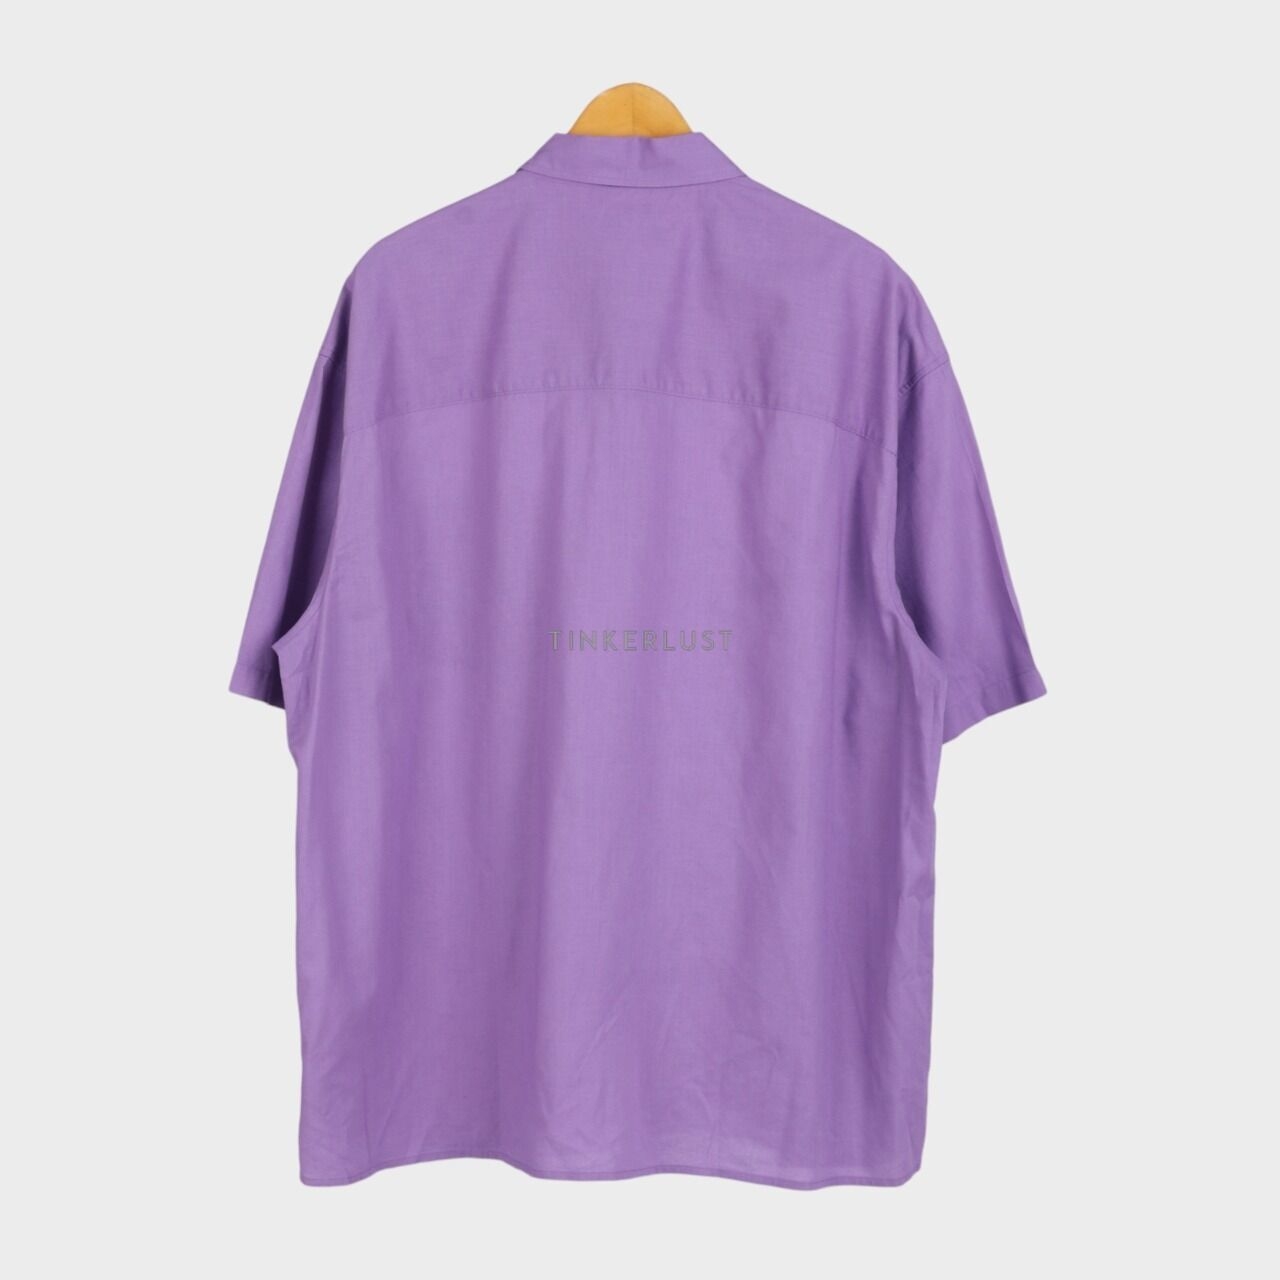 H&M Purple Shirt